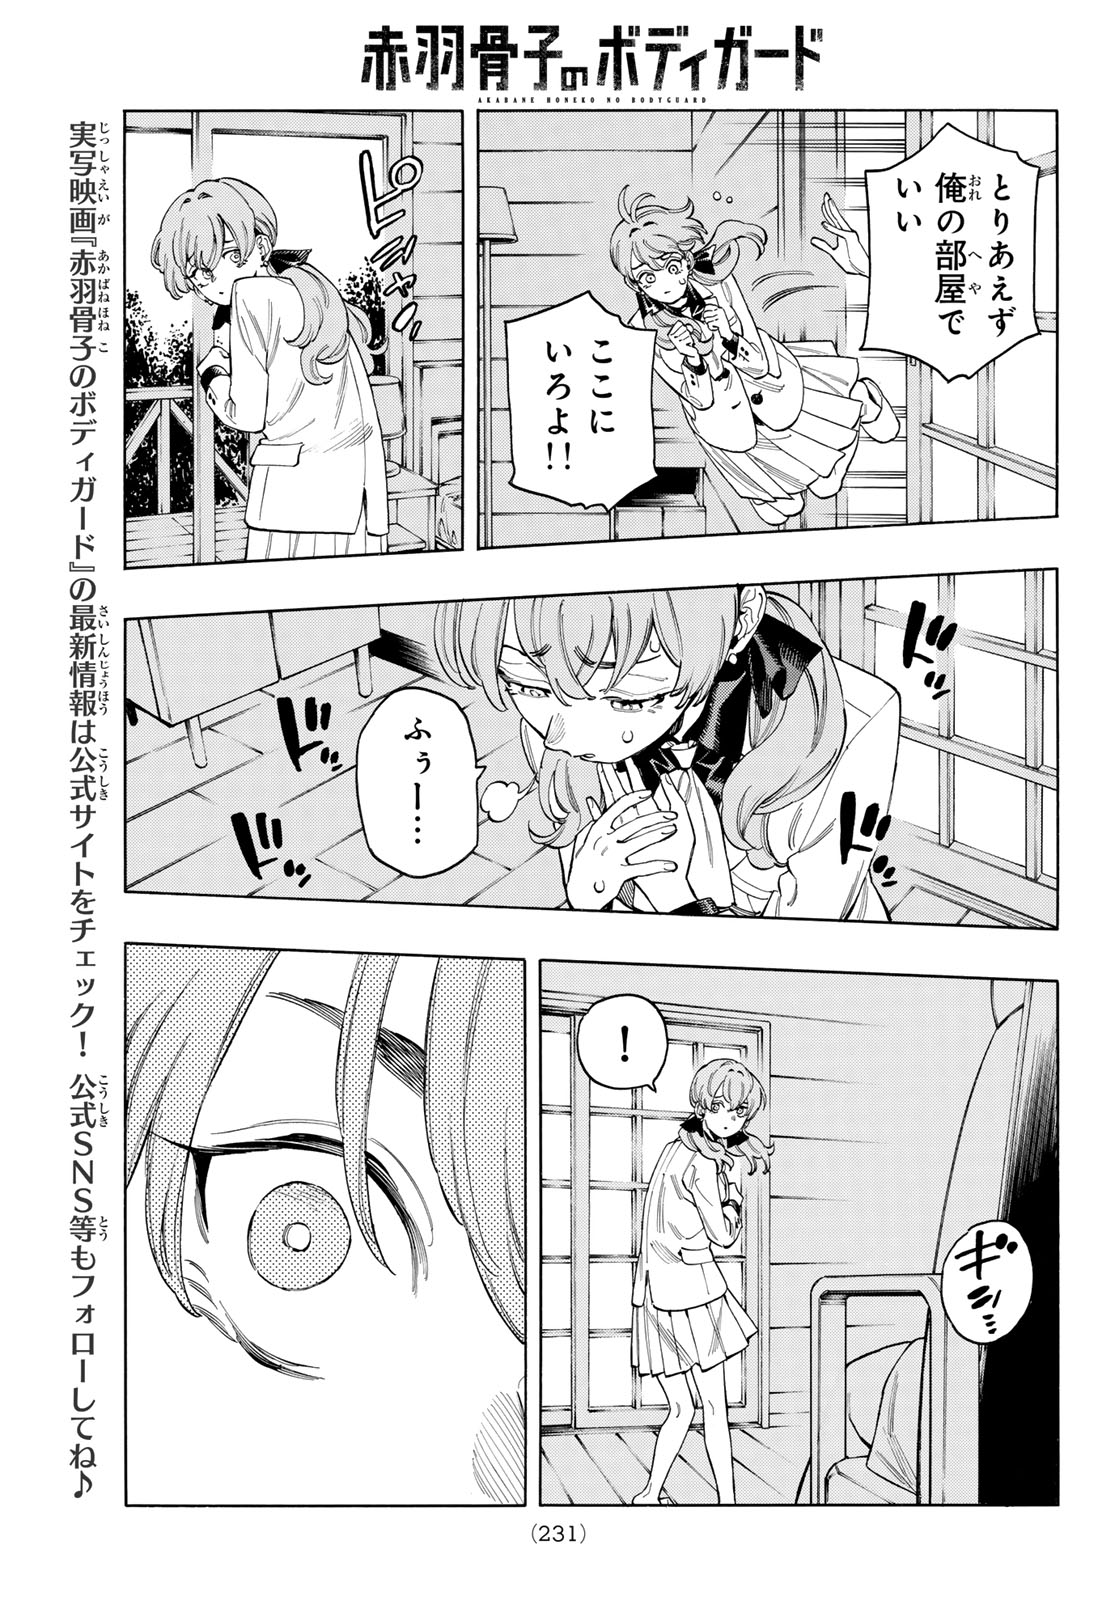 Akabane Honeko no Bodyguard - Chapter 88 - Page 7